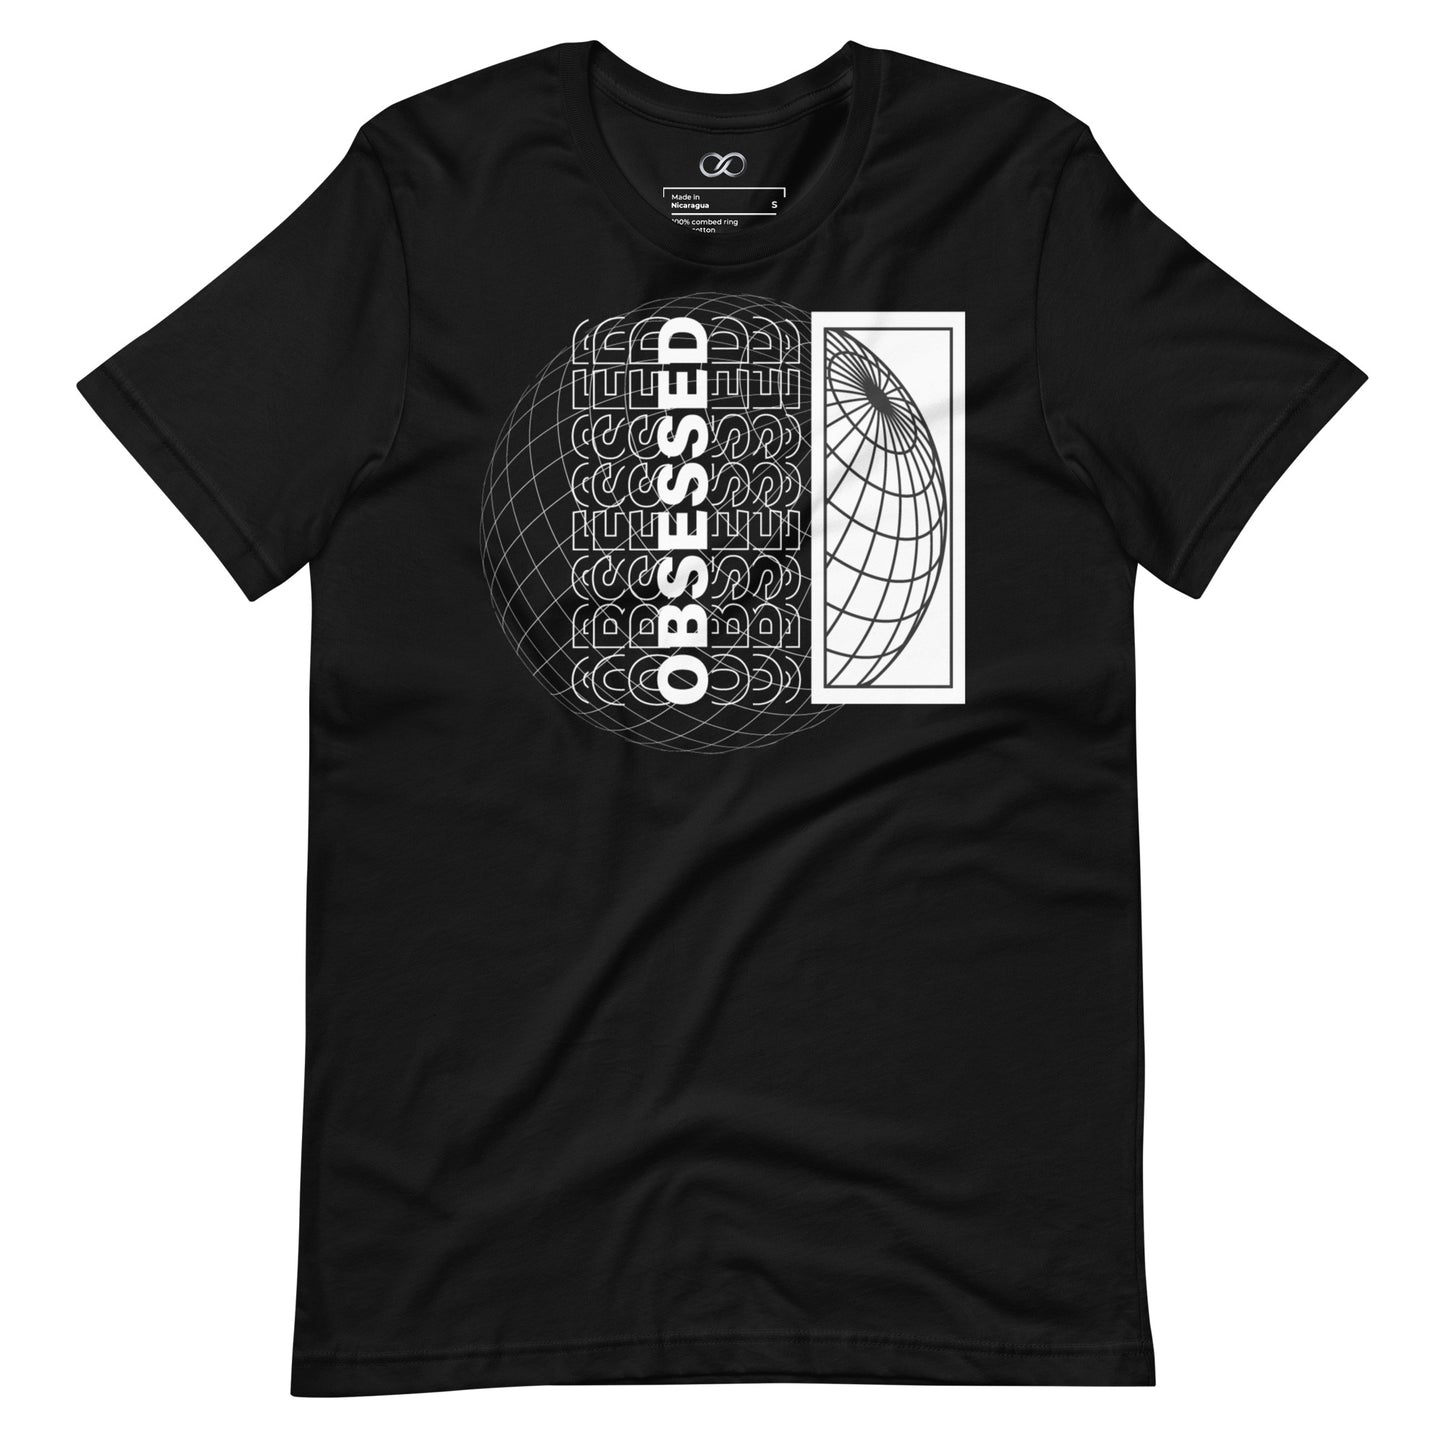 Obsessed Urban T-Shirt - Abstract Streetwear Print Tee